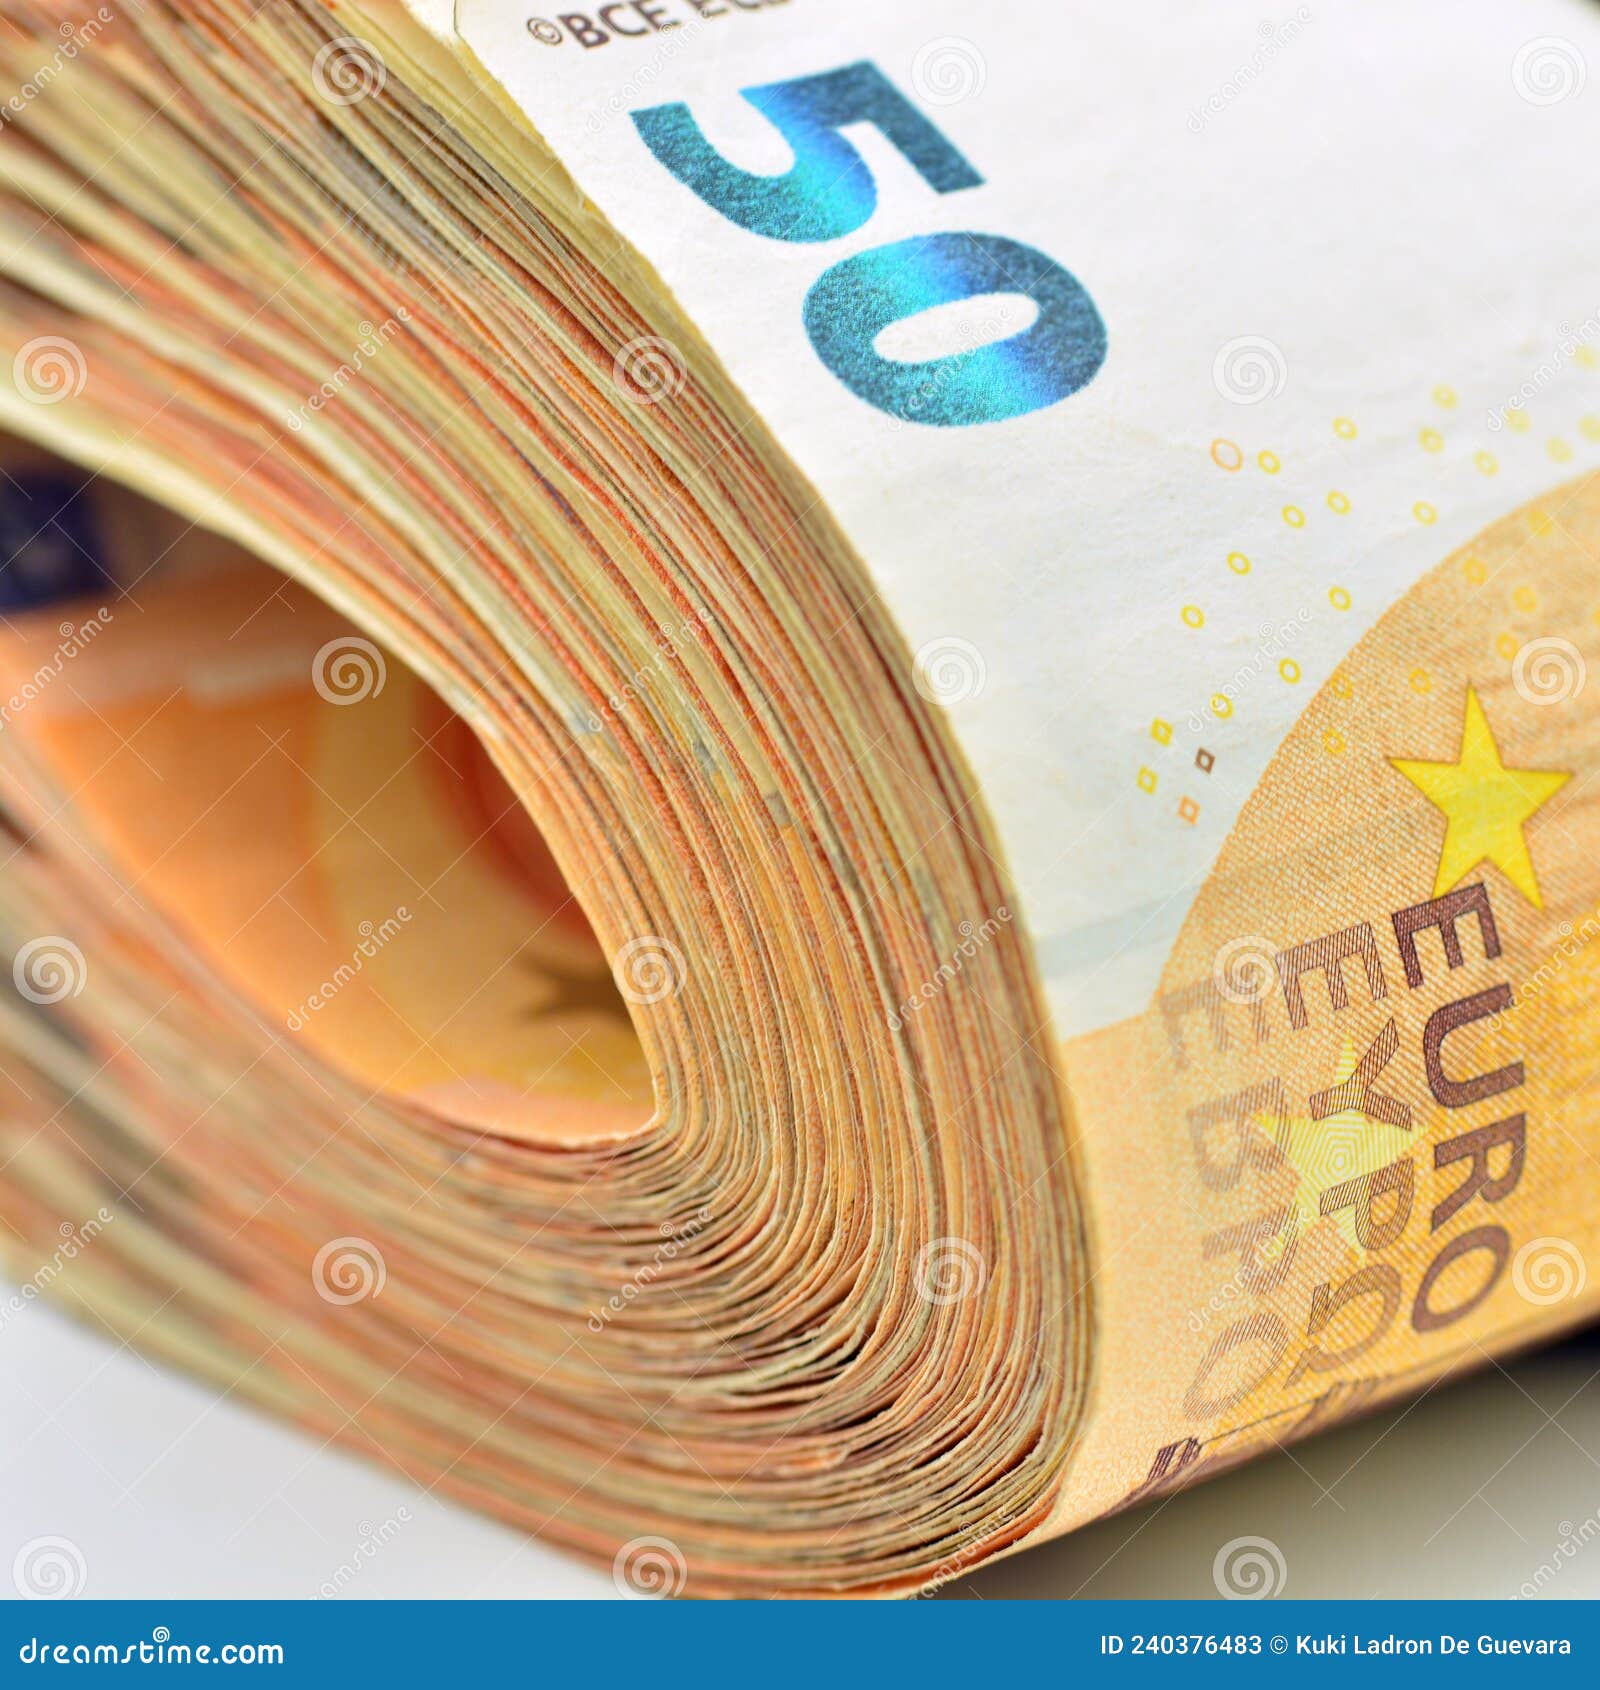 bundles of 50 euro banknotes,  on white